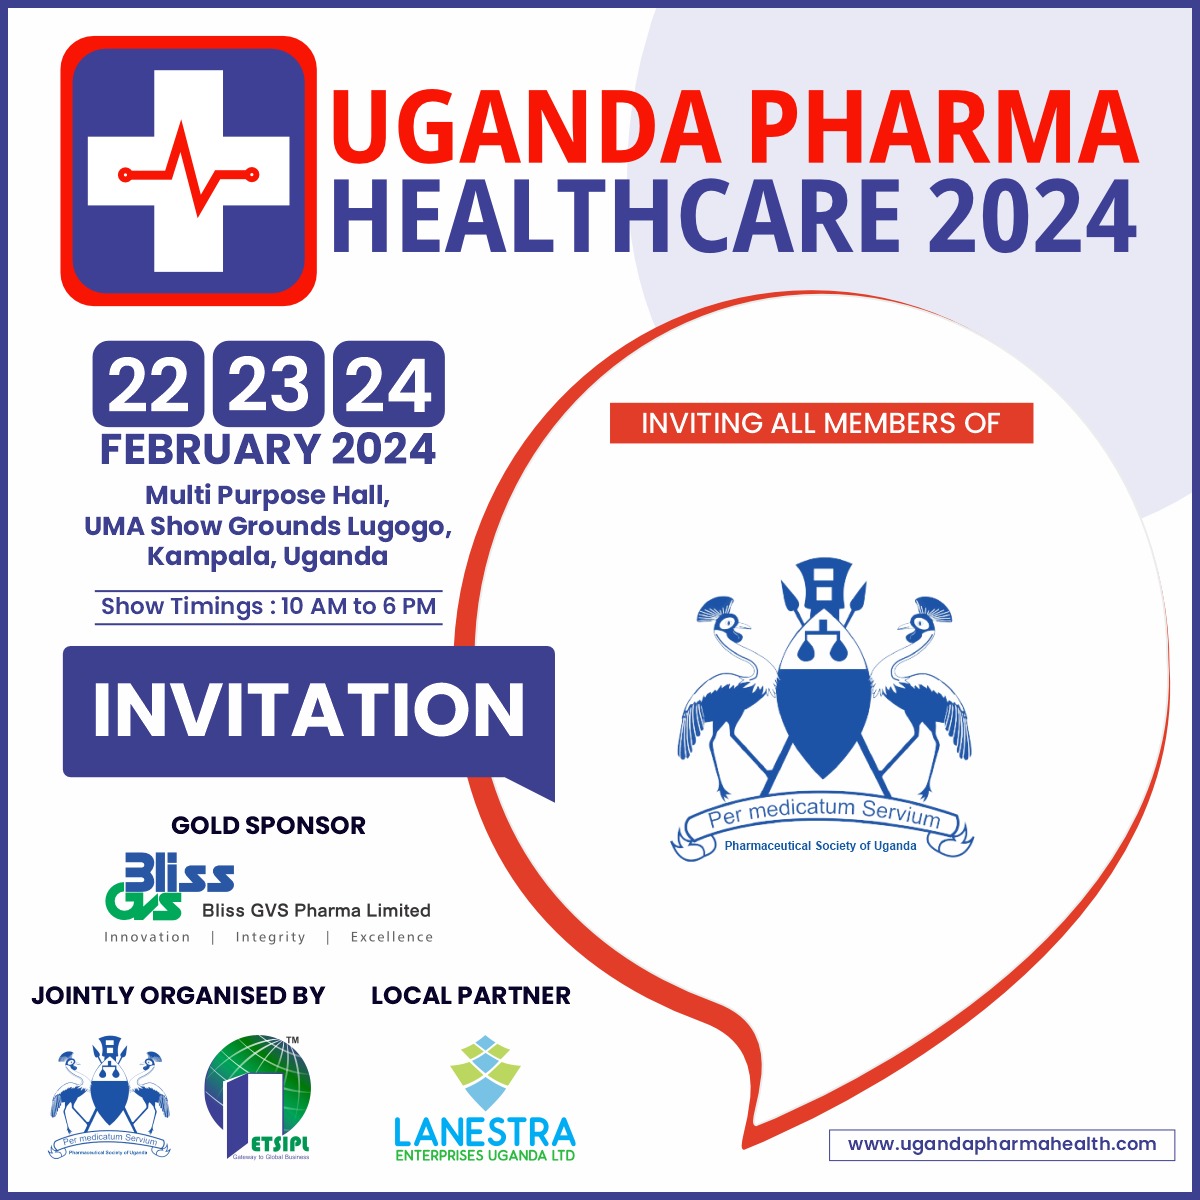 The 3rd edition of Uganda Pharma and Healthcare Exhibition 2024